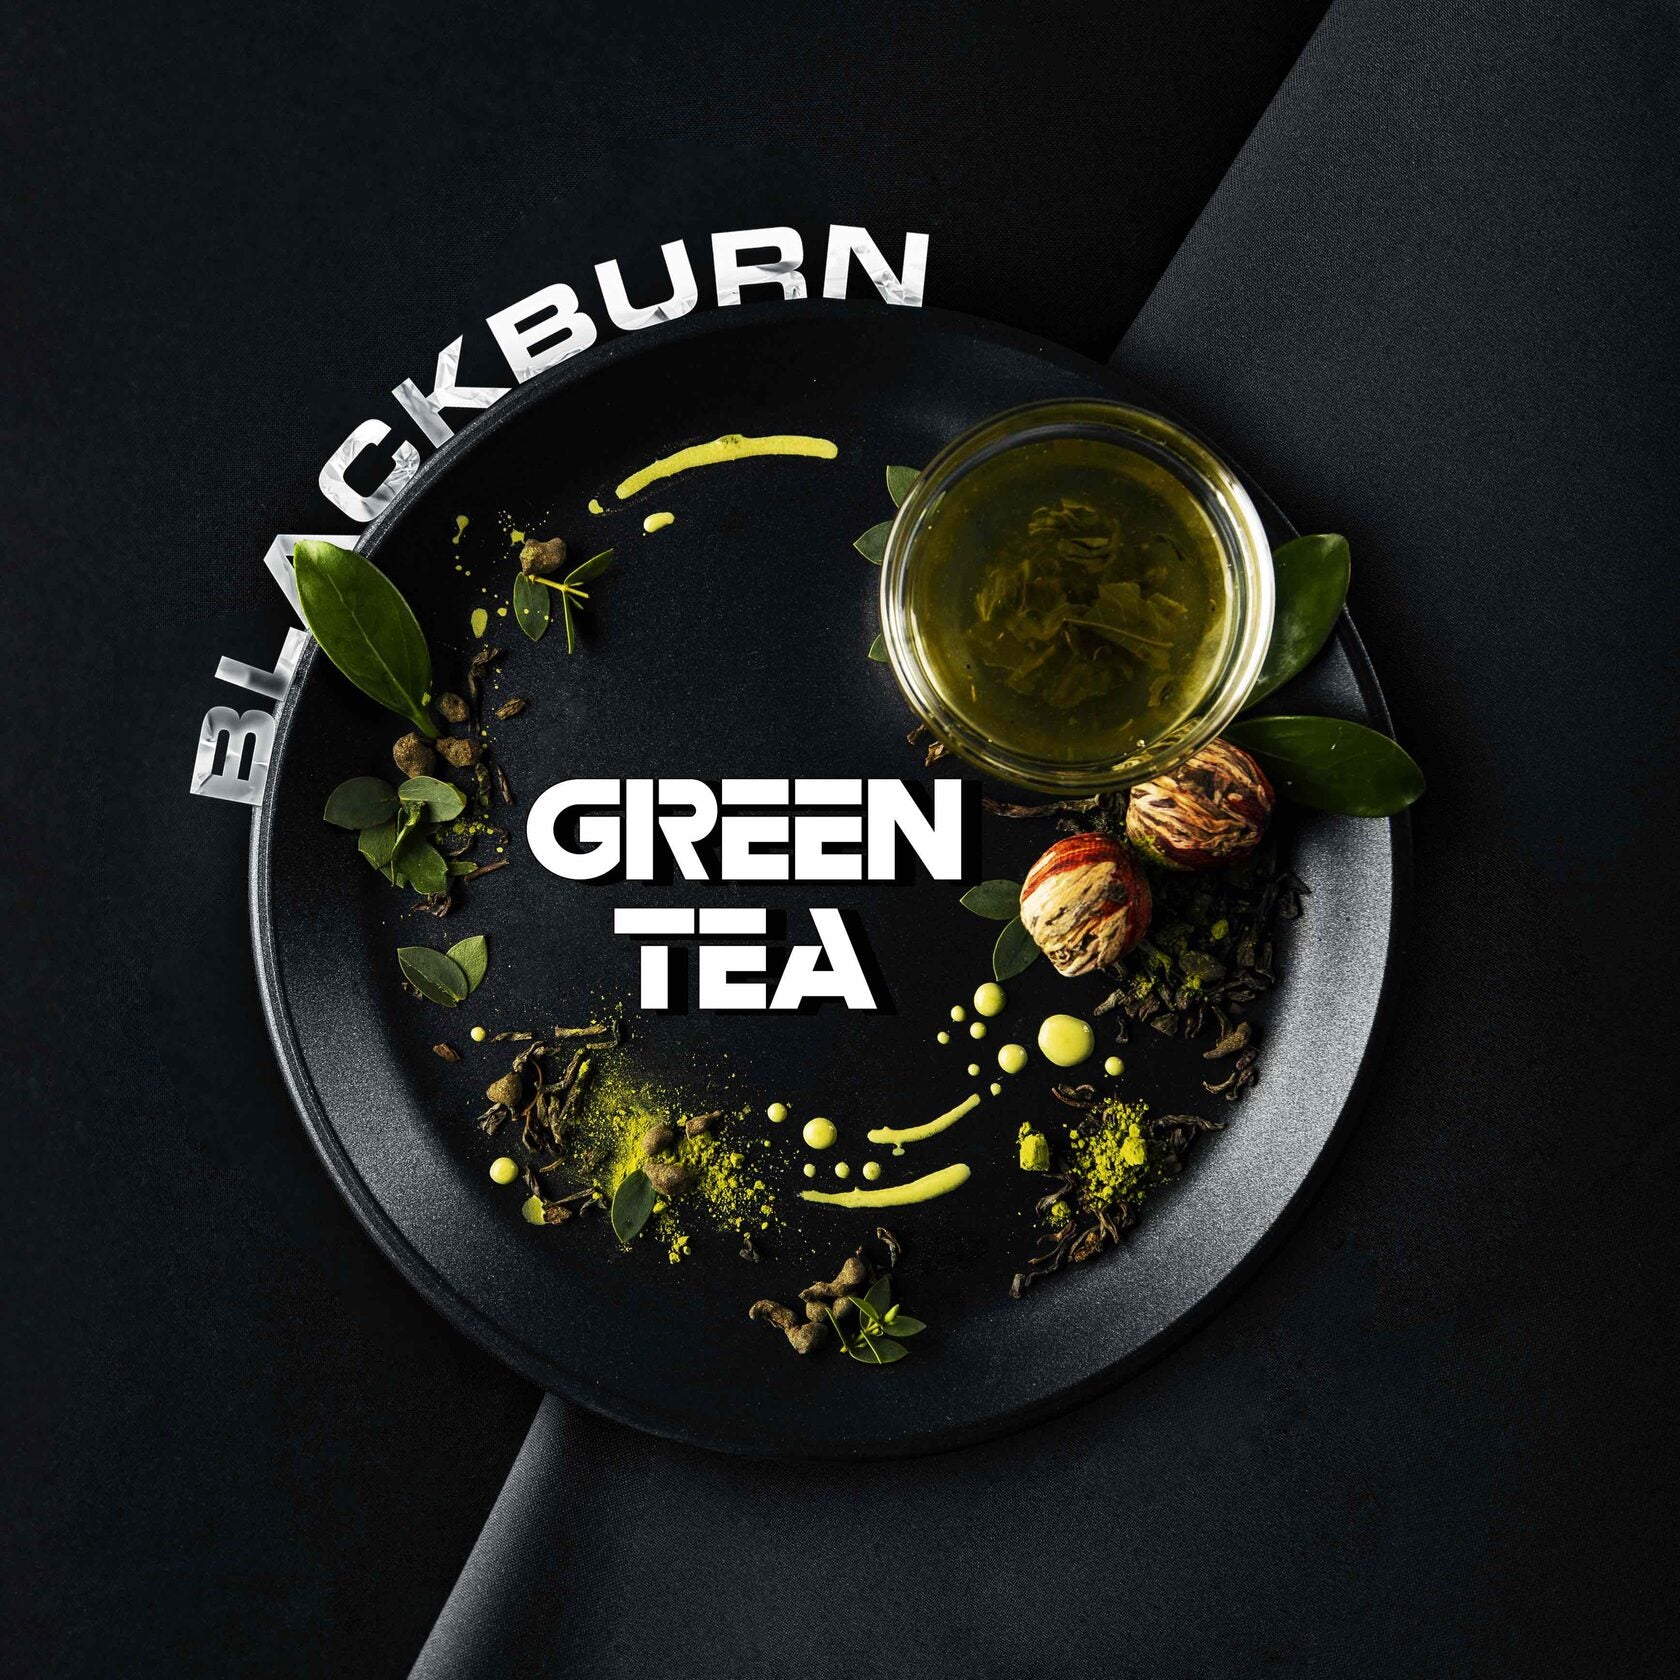 Black Burn Green Tea - Smoxygen